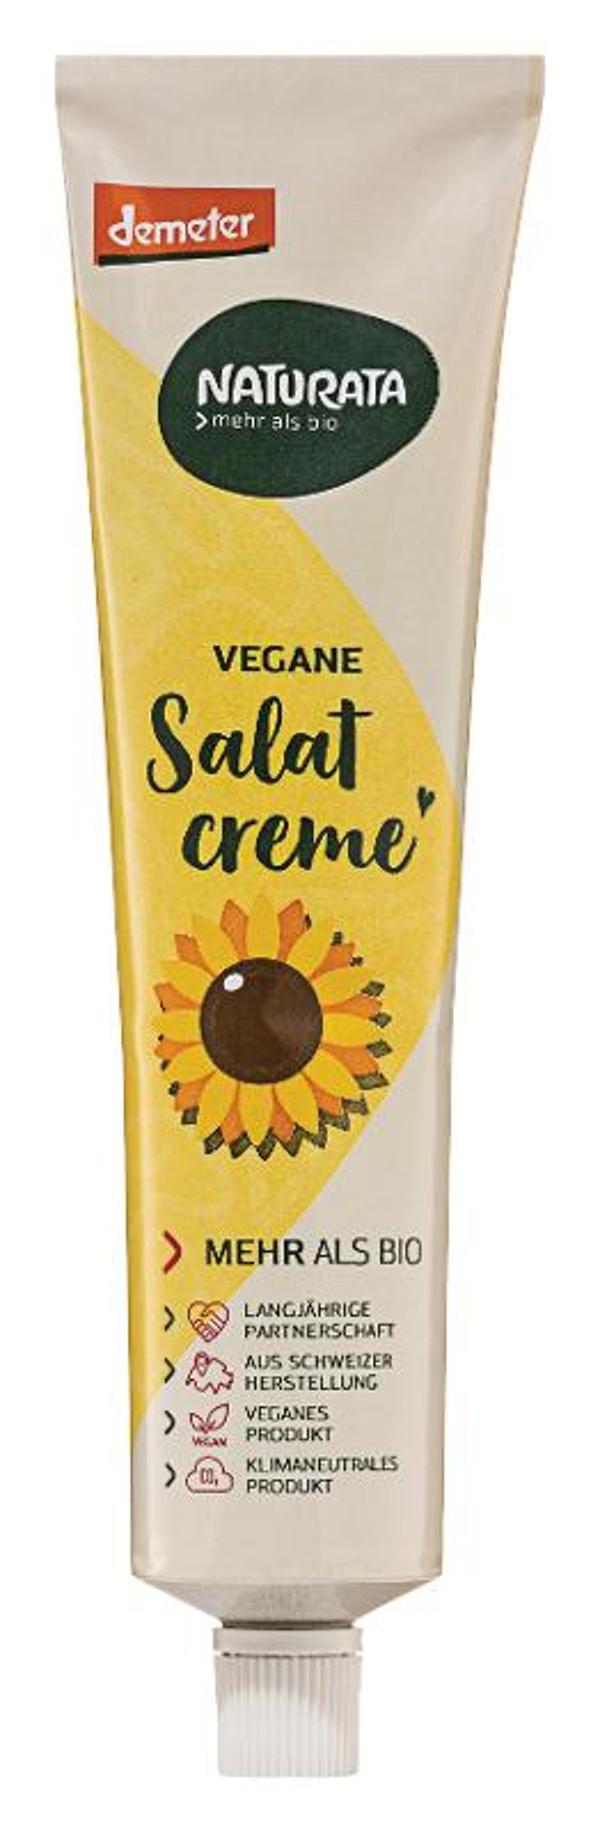 Produktfoto zu Salatcreme ohne Ei